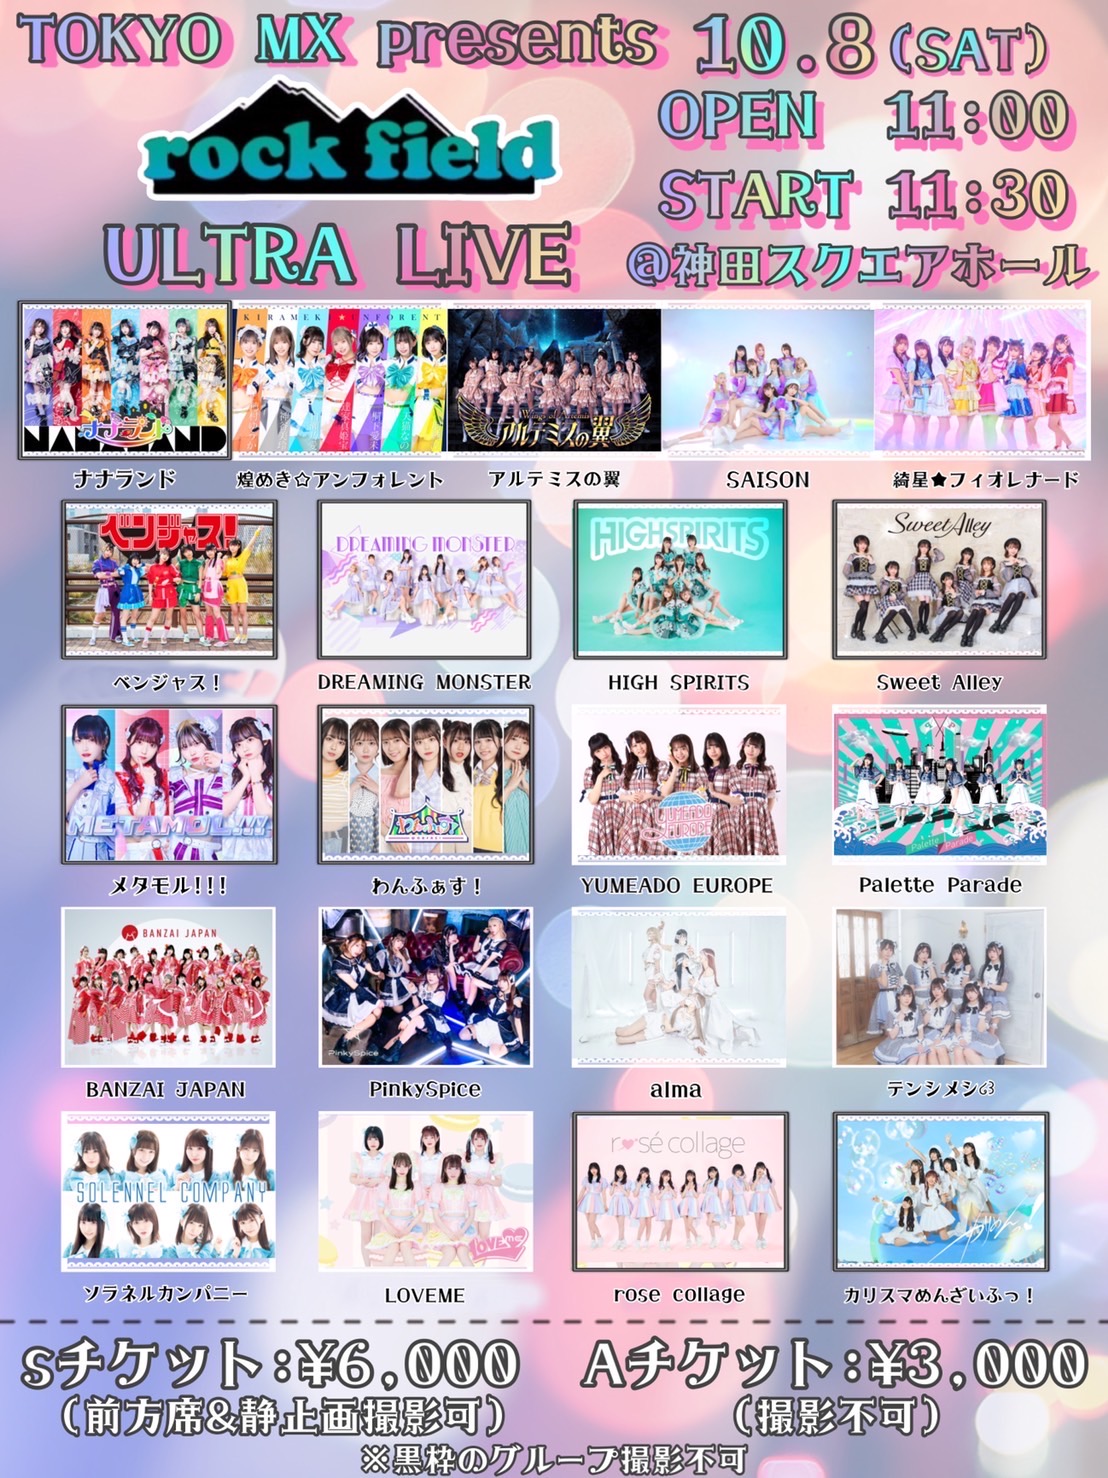 TOKYO MX presents rock field ULTRA LIVE